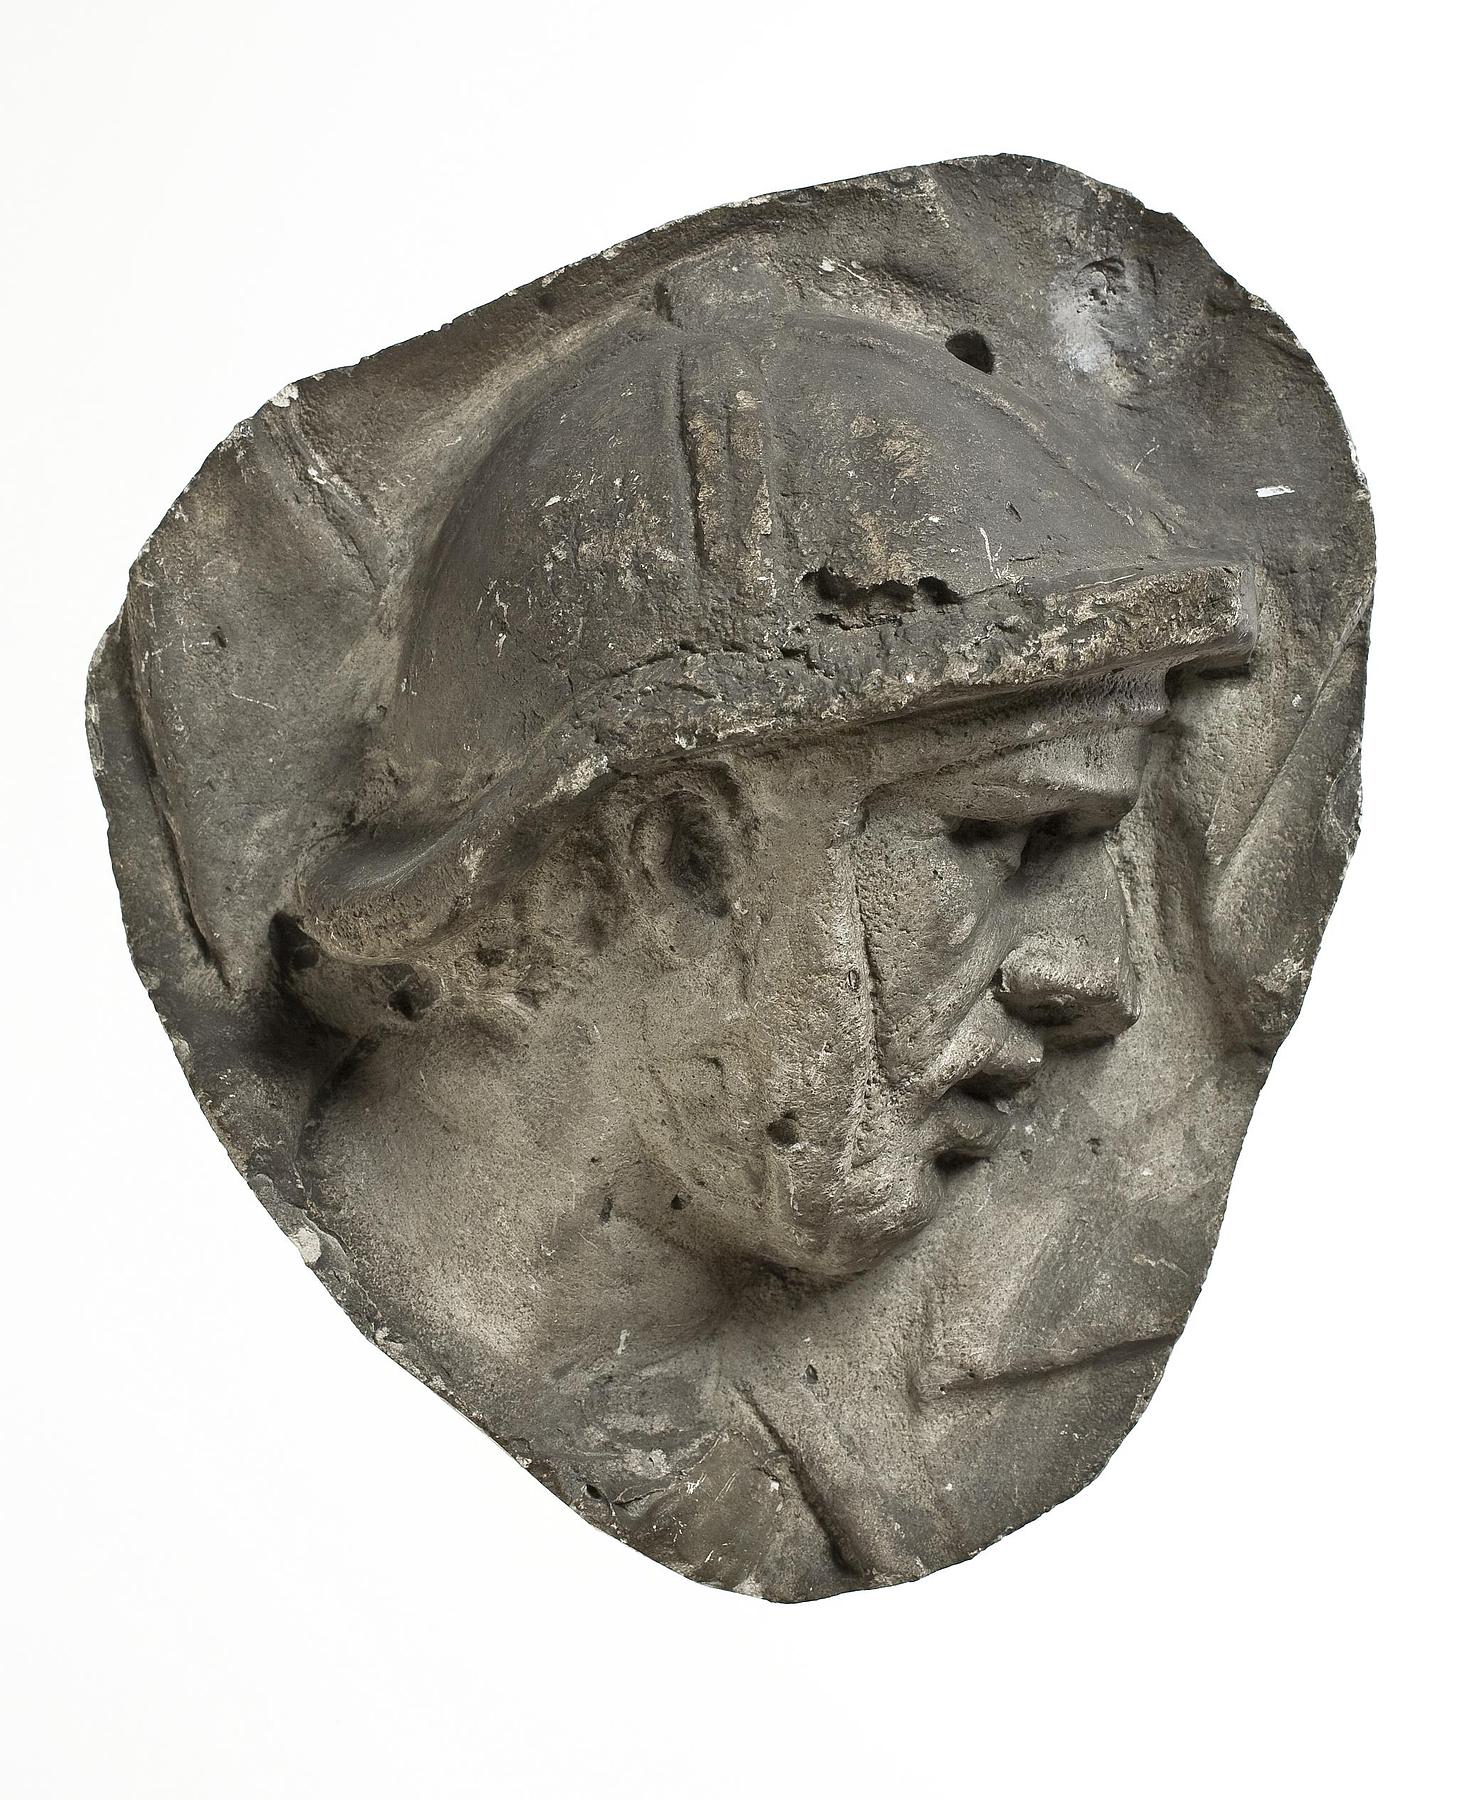 Head of a helmeted Roman horseman, L326k